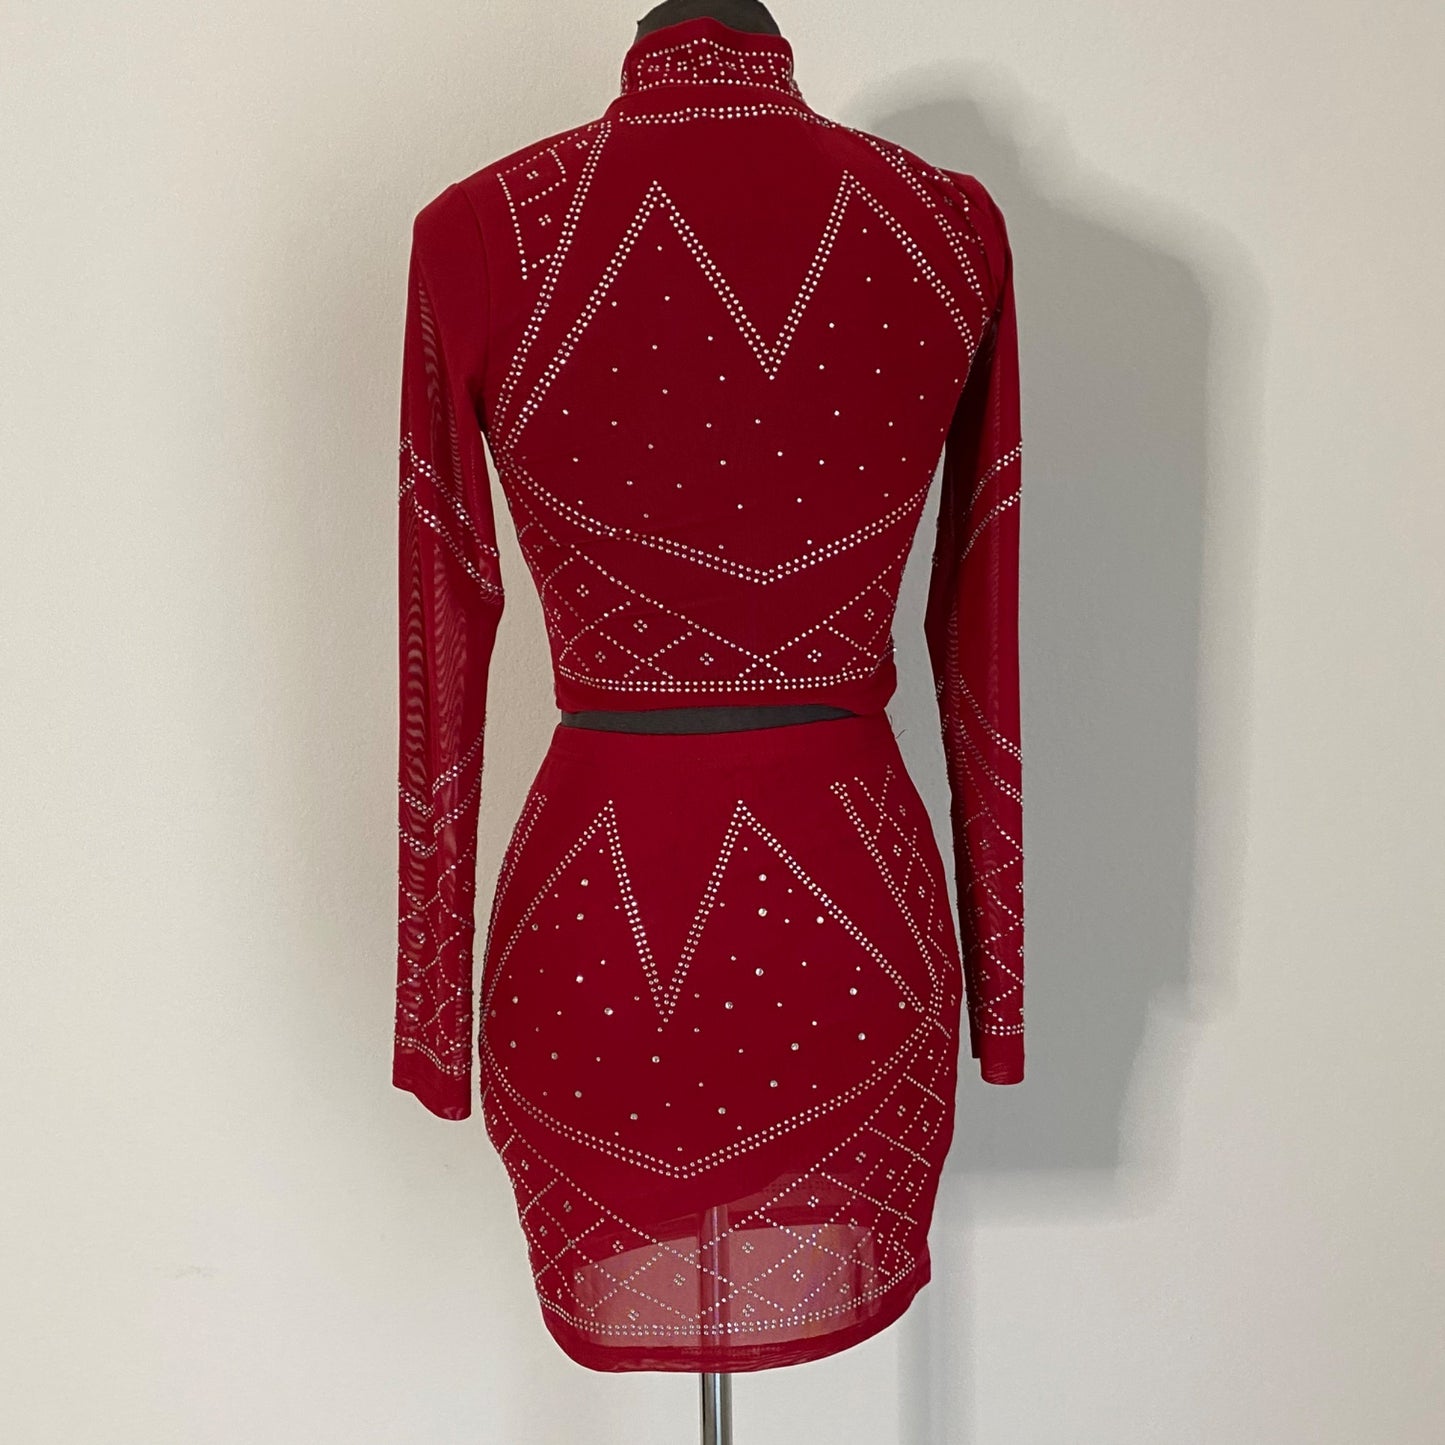 Glamaker sz S Crop top mini skirt Red stone studded set